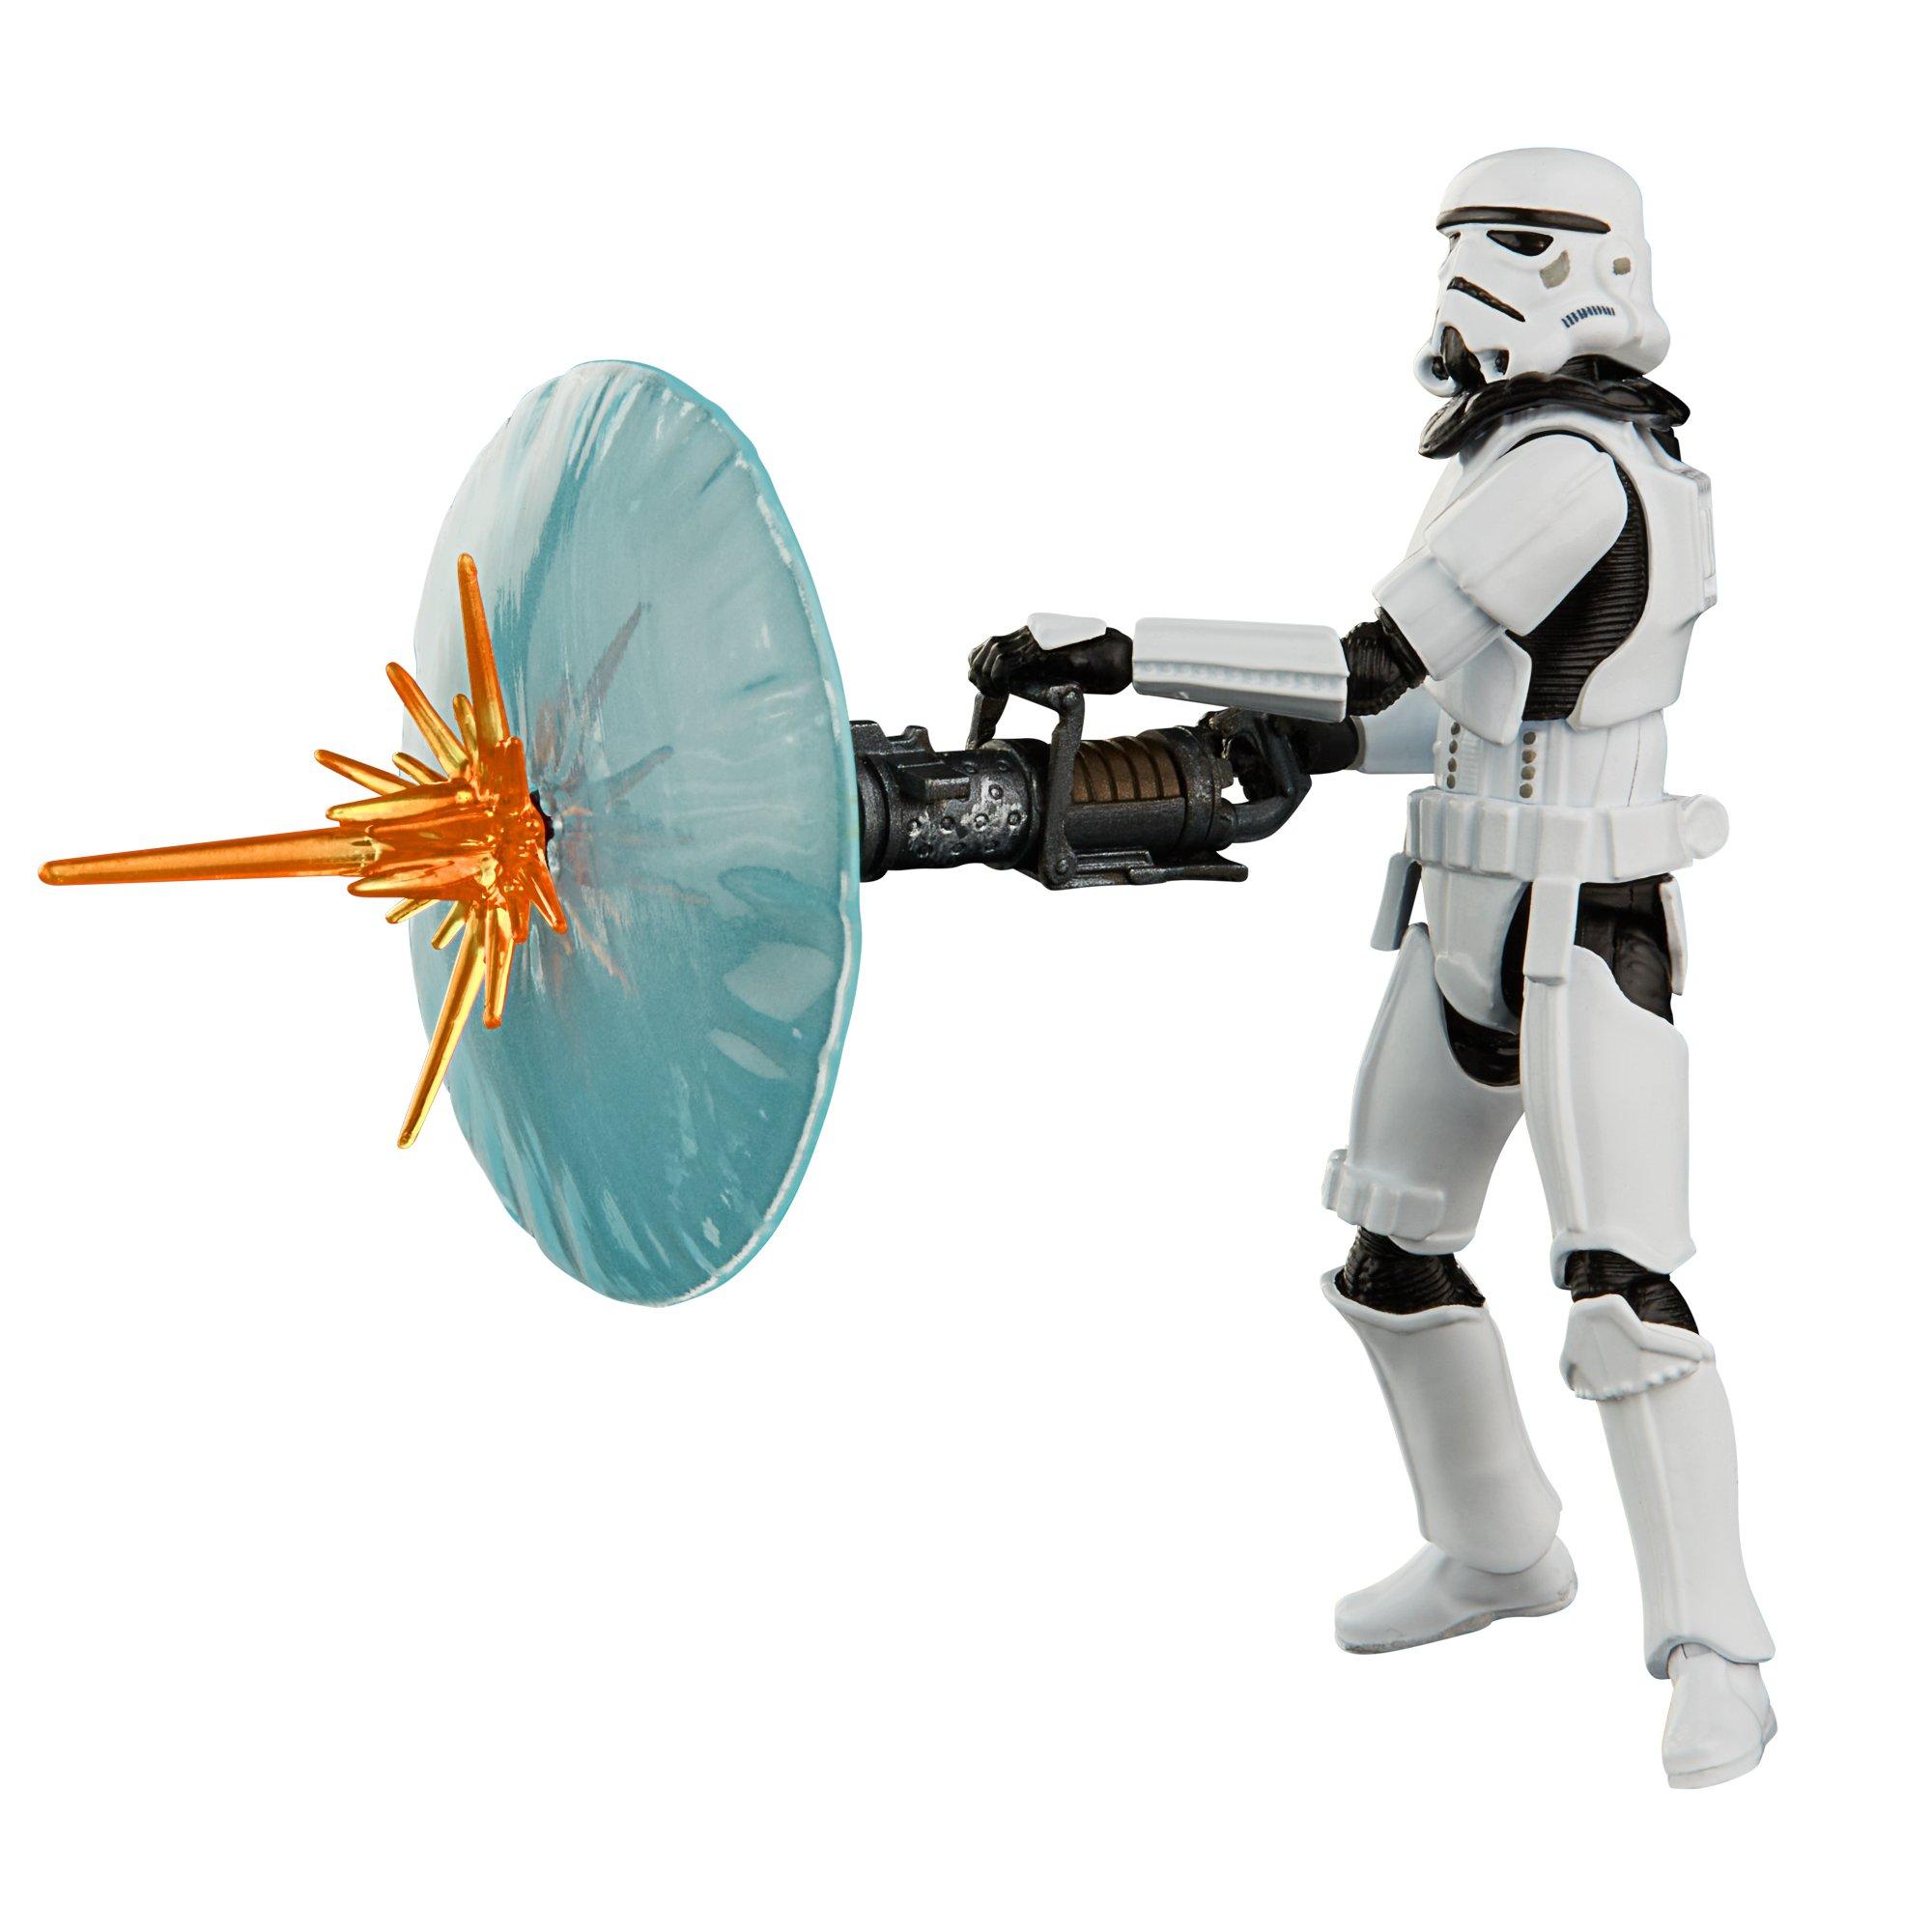 Hasbro Star Wars Original Trilogy Collection Stormtrooper Action Figure for sale online 